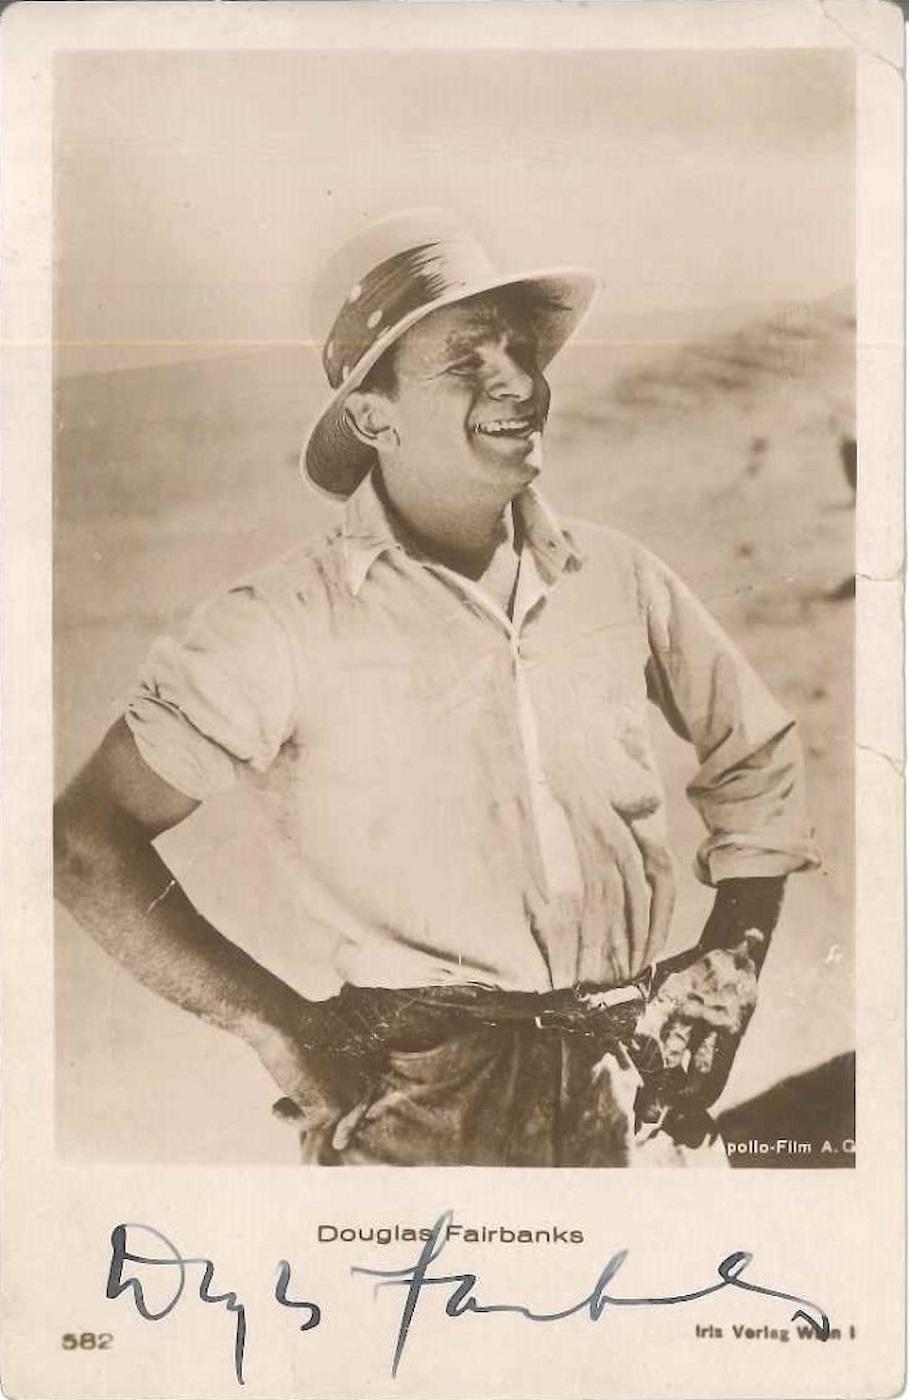 Foto-Postcard mit Porträt und Autogramm von Douglas Fairbanks - 1930 ca.